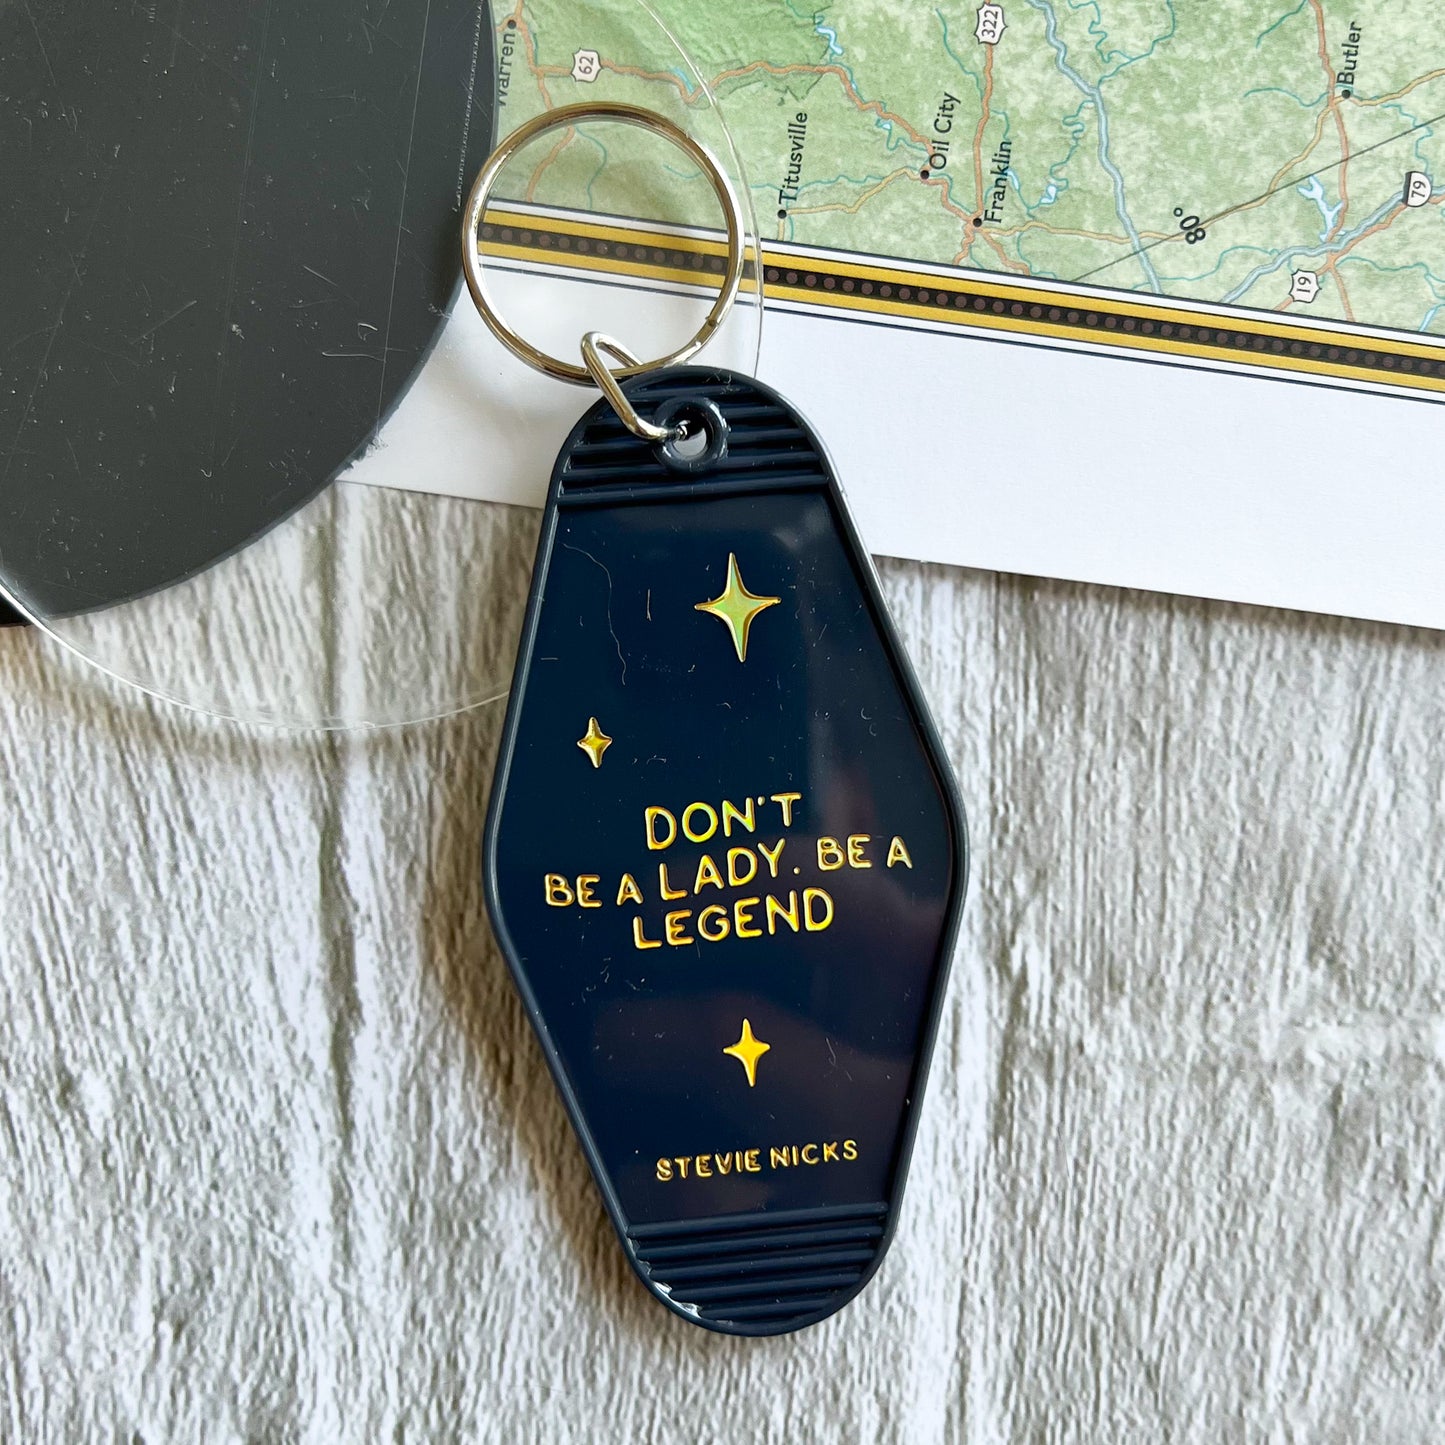 Legend Stevie // motel keychain